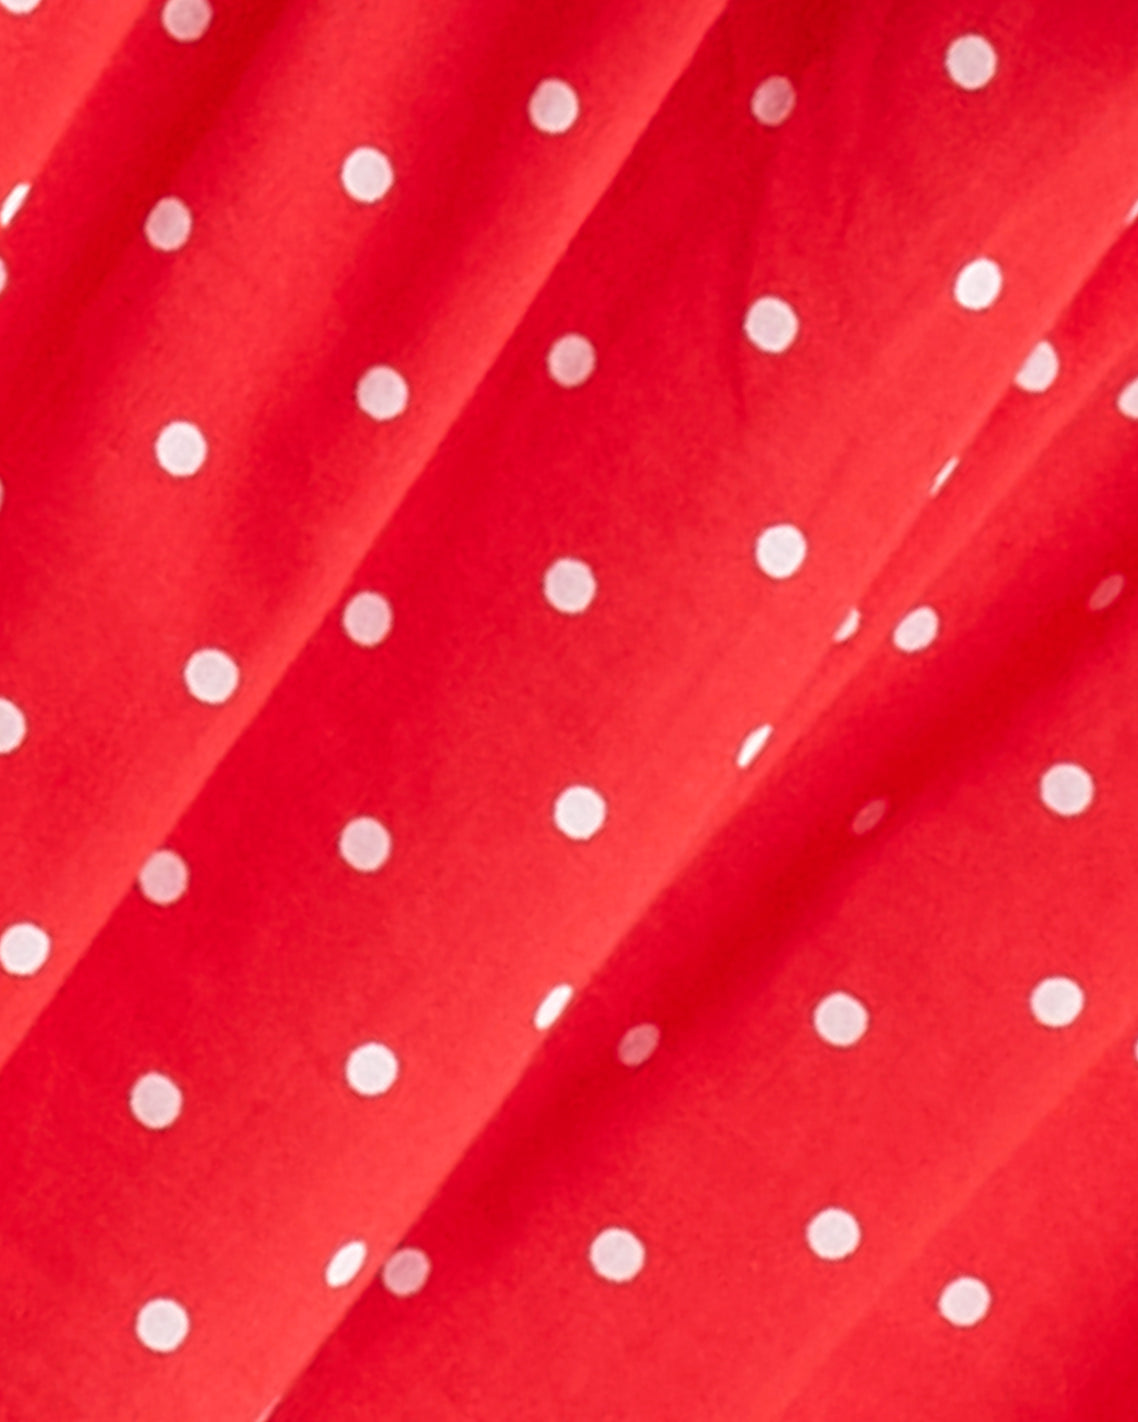 Ruffled Wrap Skirt in Red Polka Dot